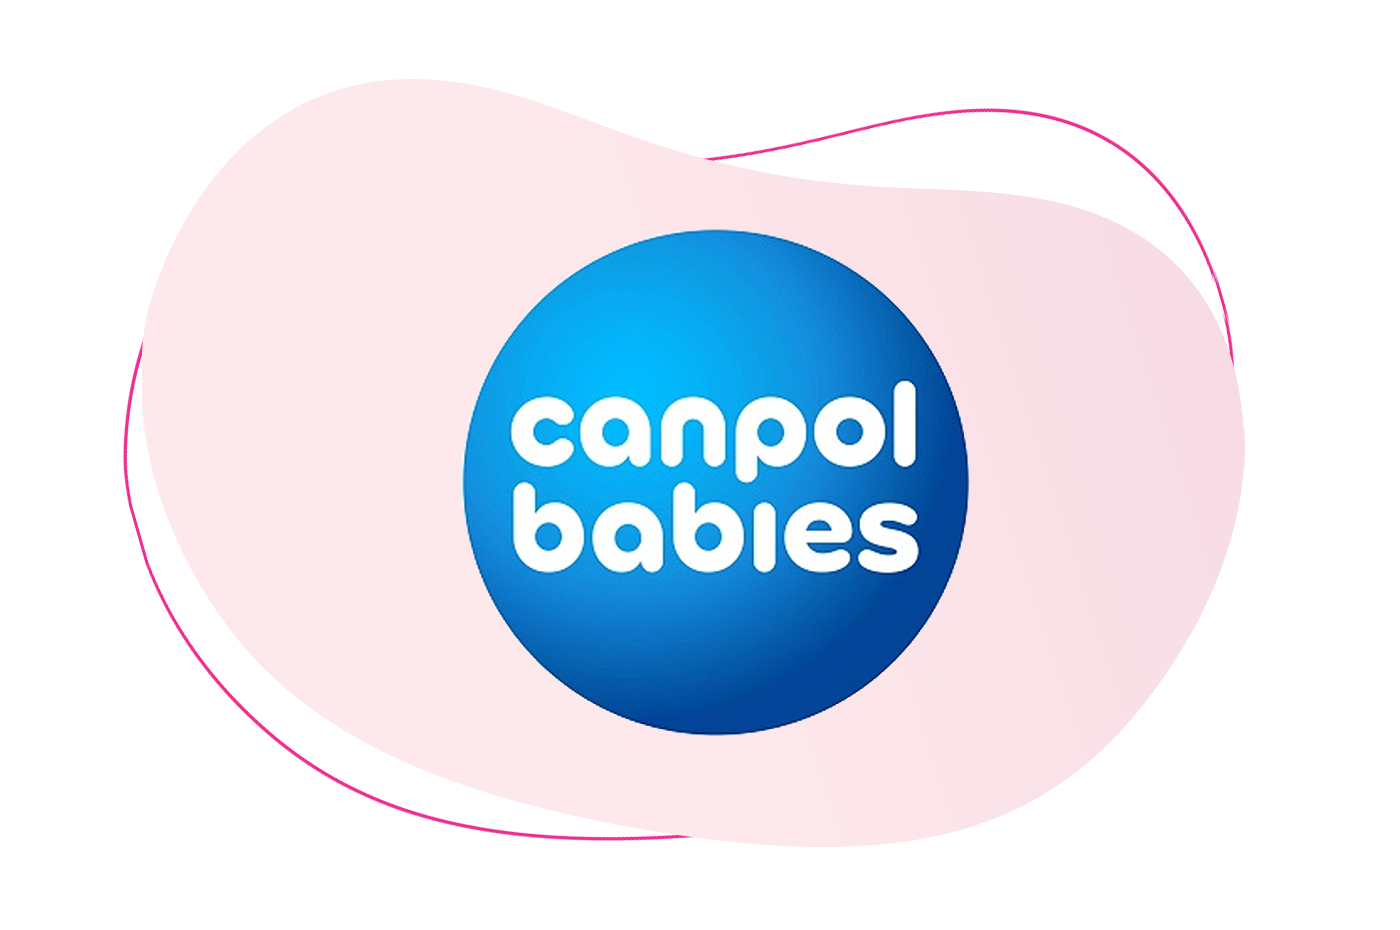 canpol babies